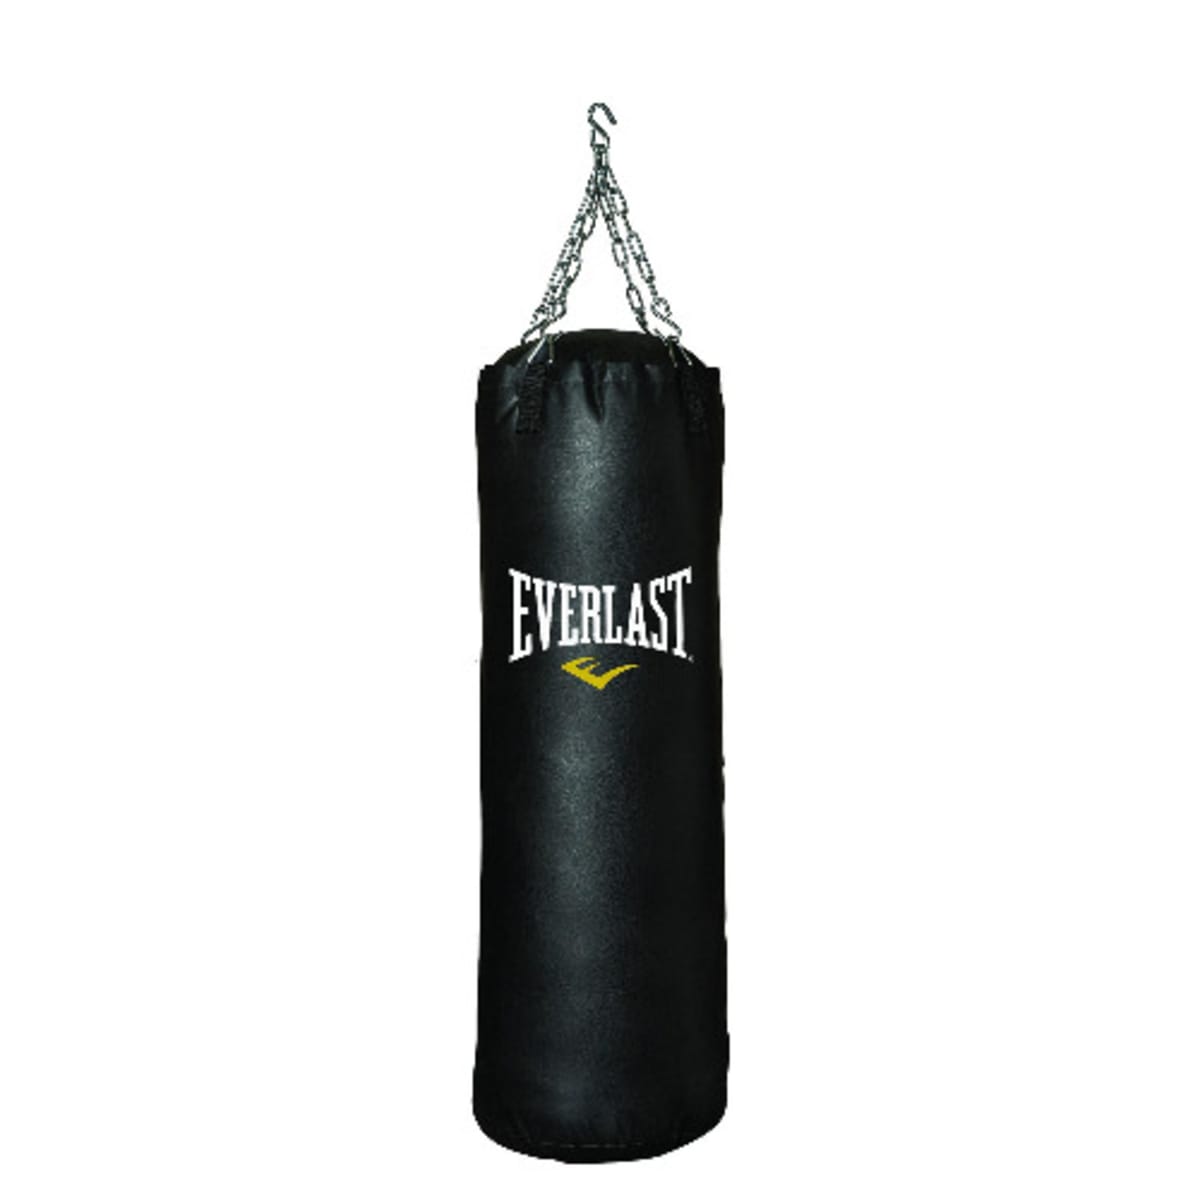 Everlast Boxing Bag - Black